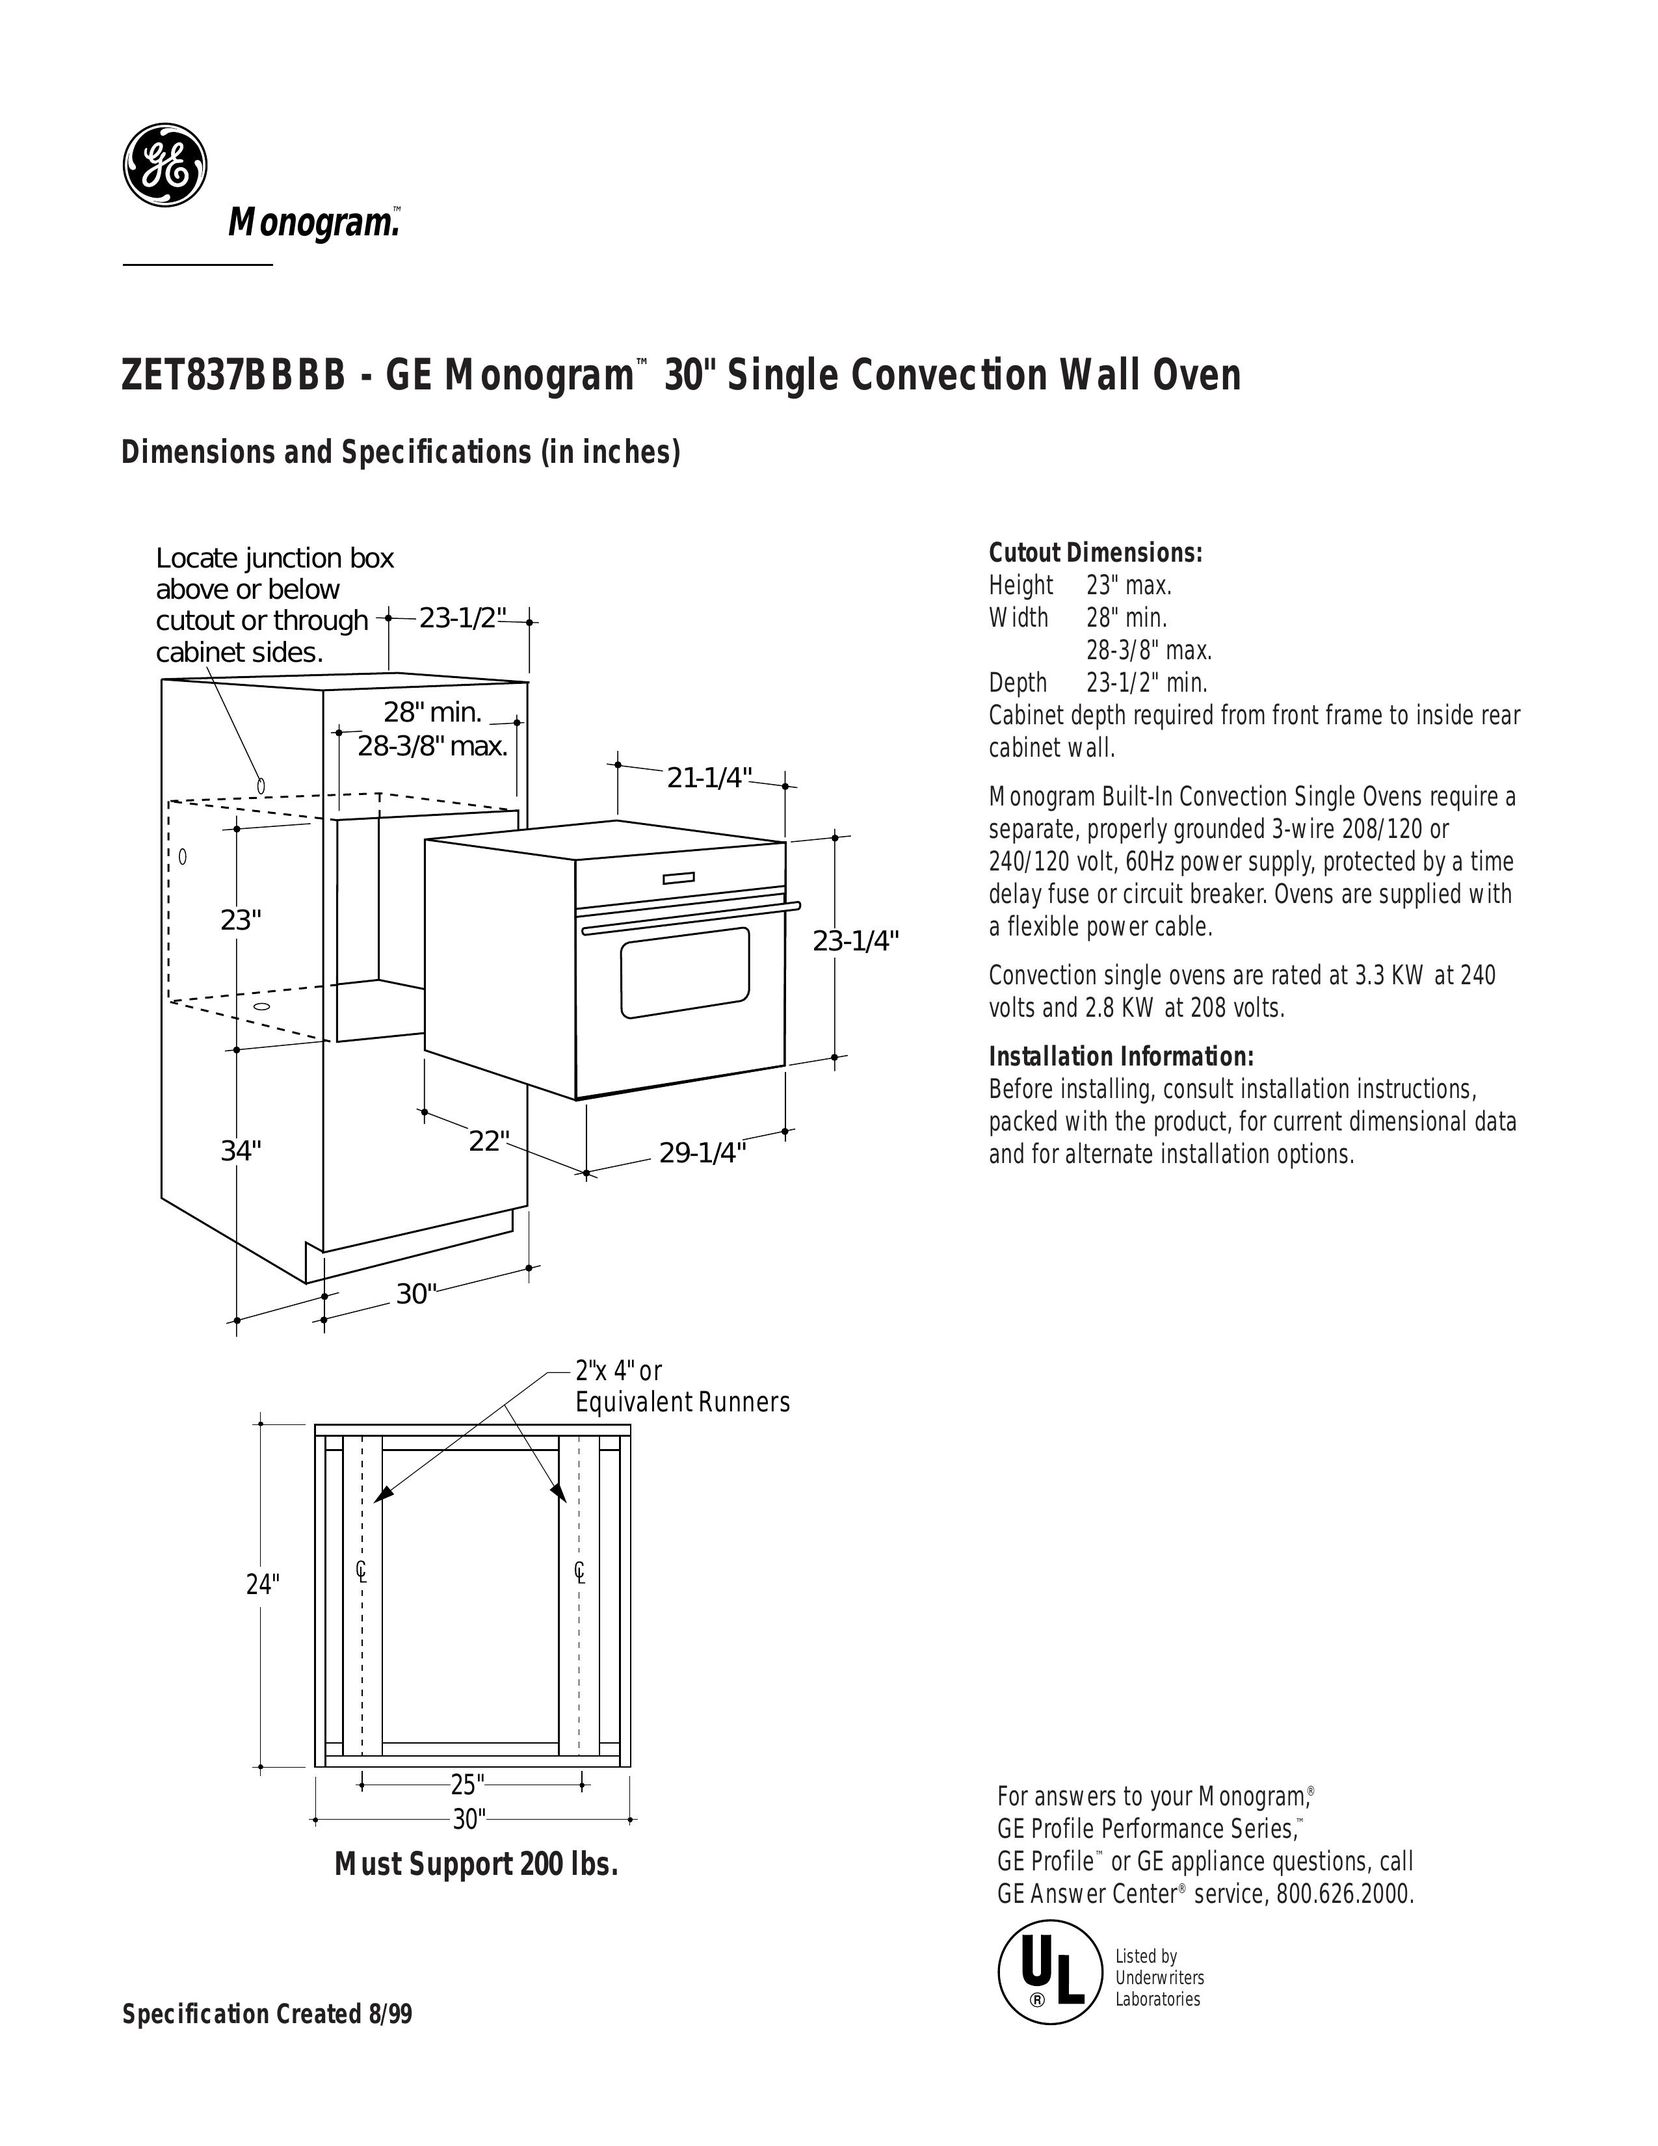 GE Monogram ZET837BBBB Convection Oven User Manual